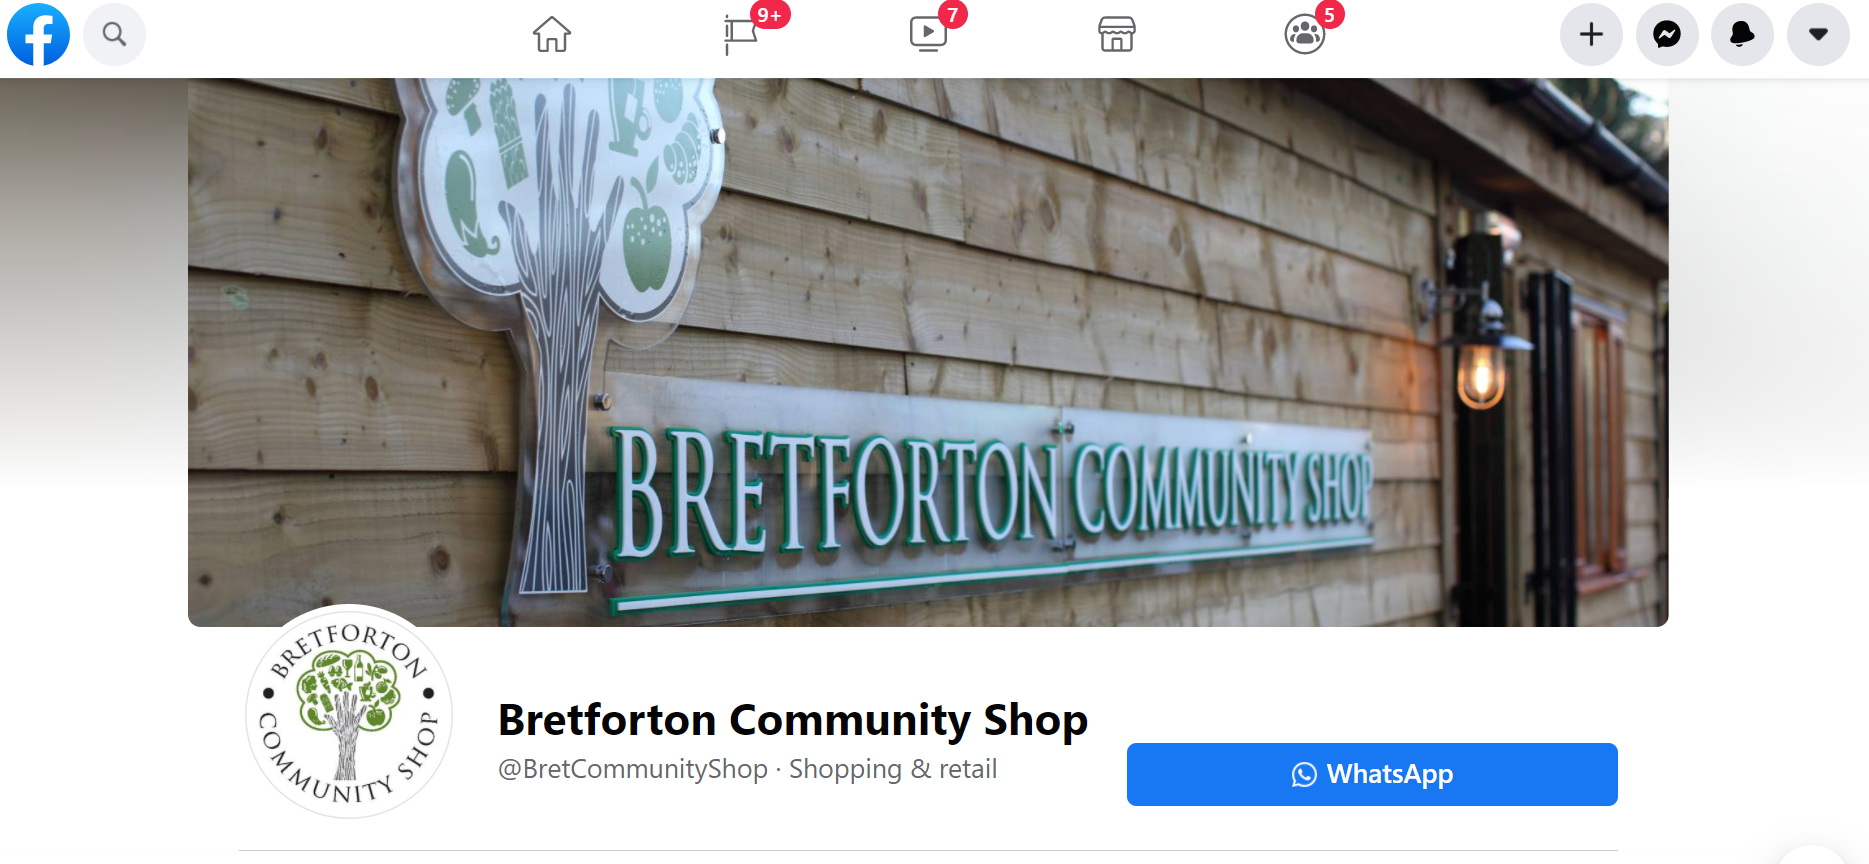 A screenshot of Bretforton Community Shop's facebook page